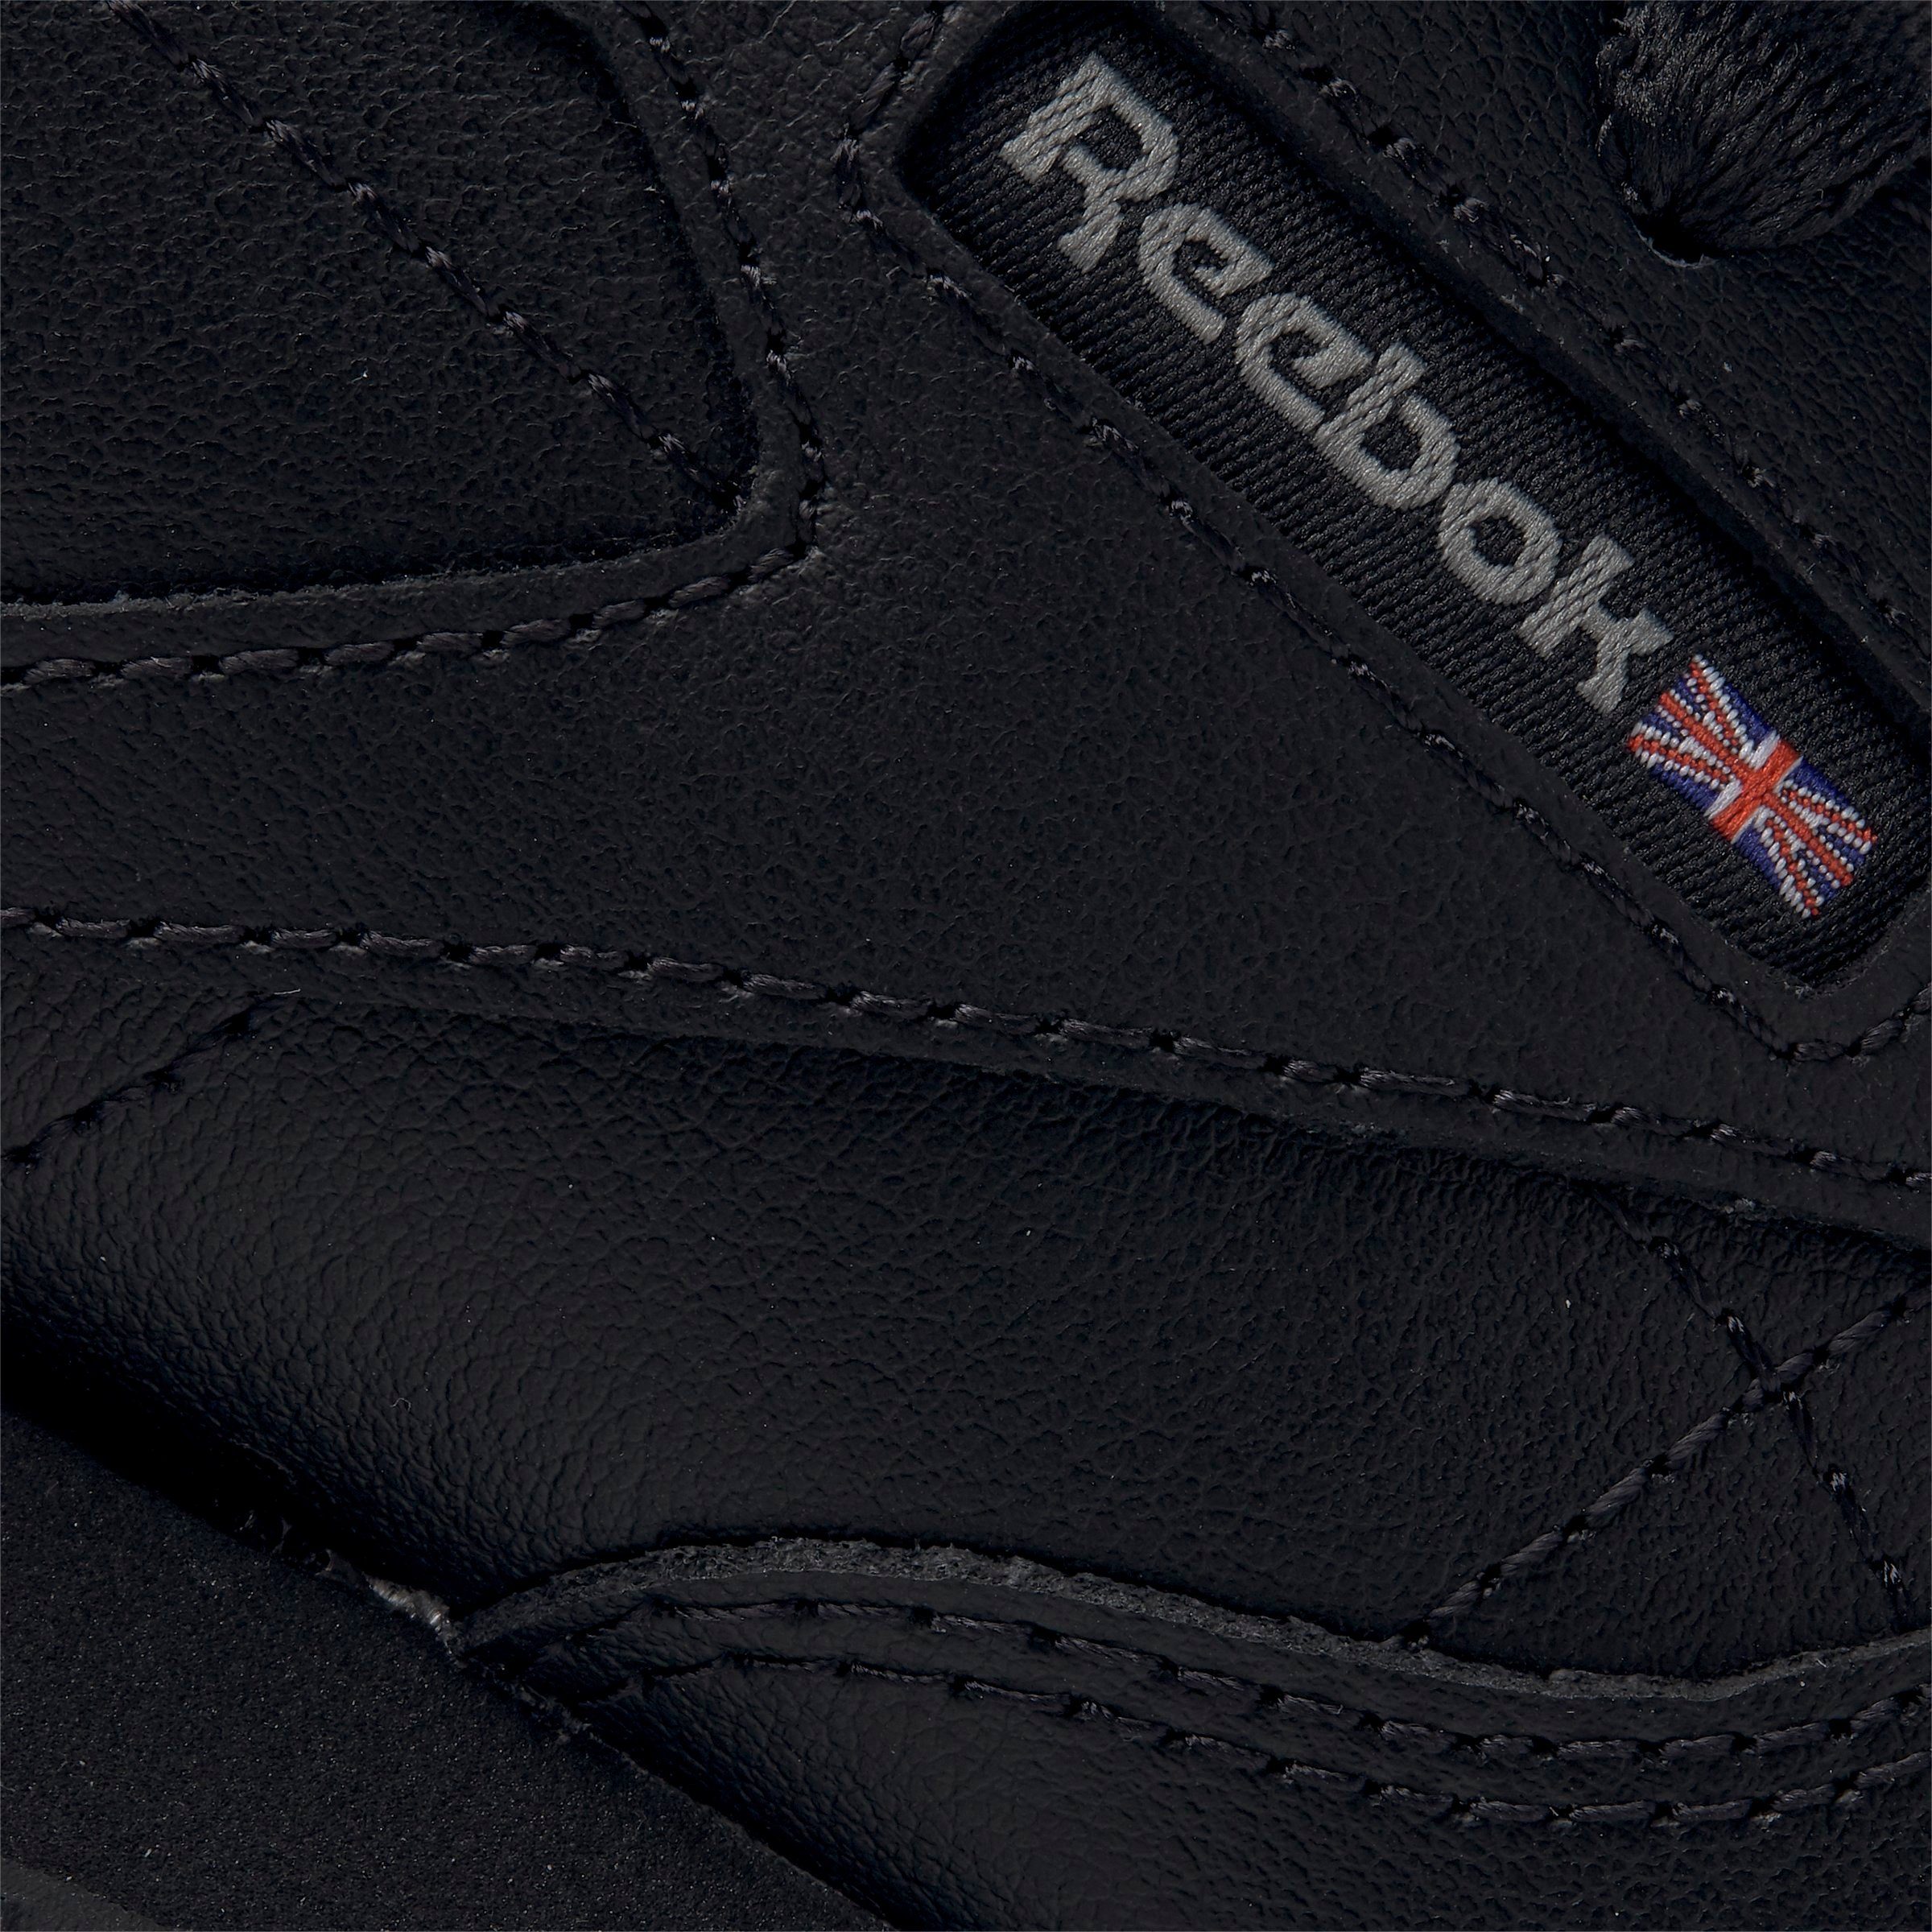 Reebok Classic CLASSIC LEATHER Sneaker schwarz